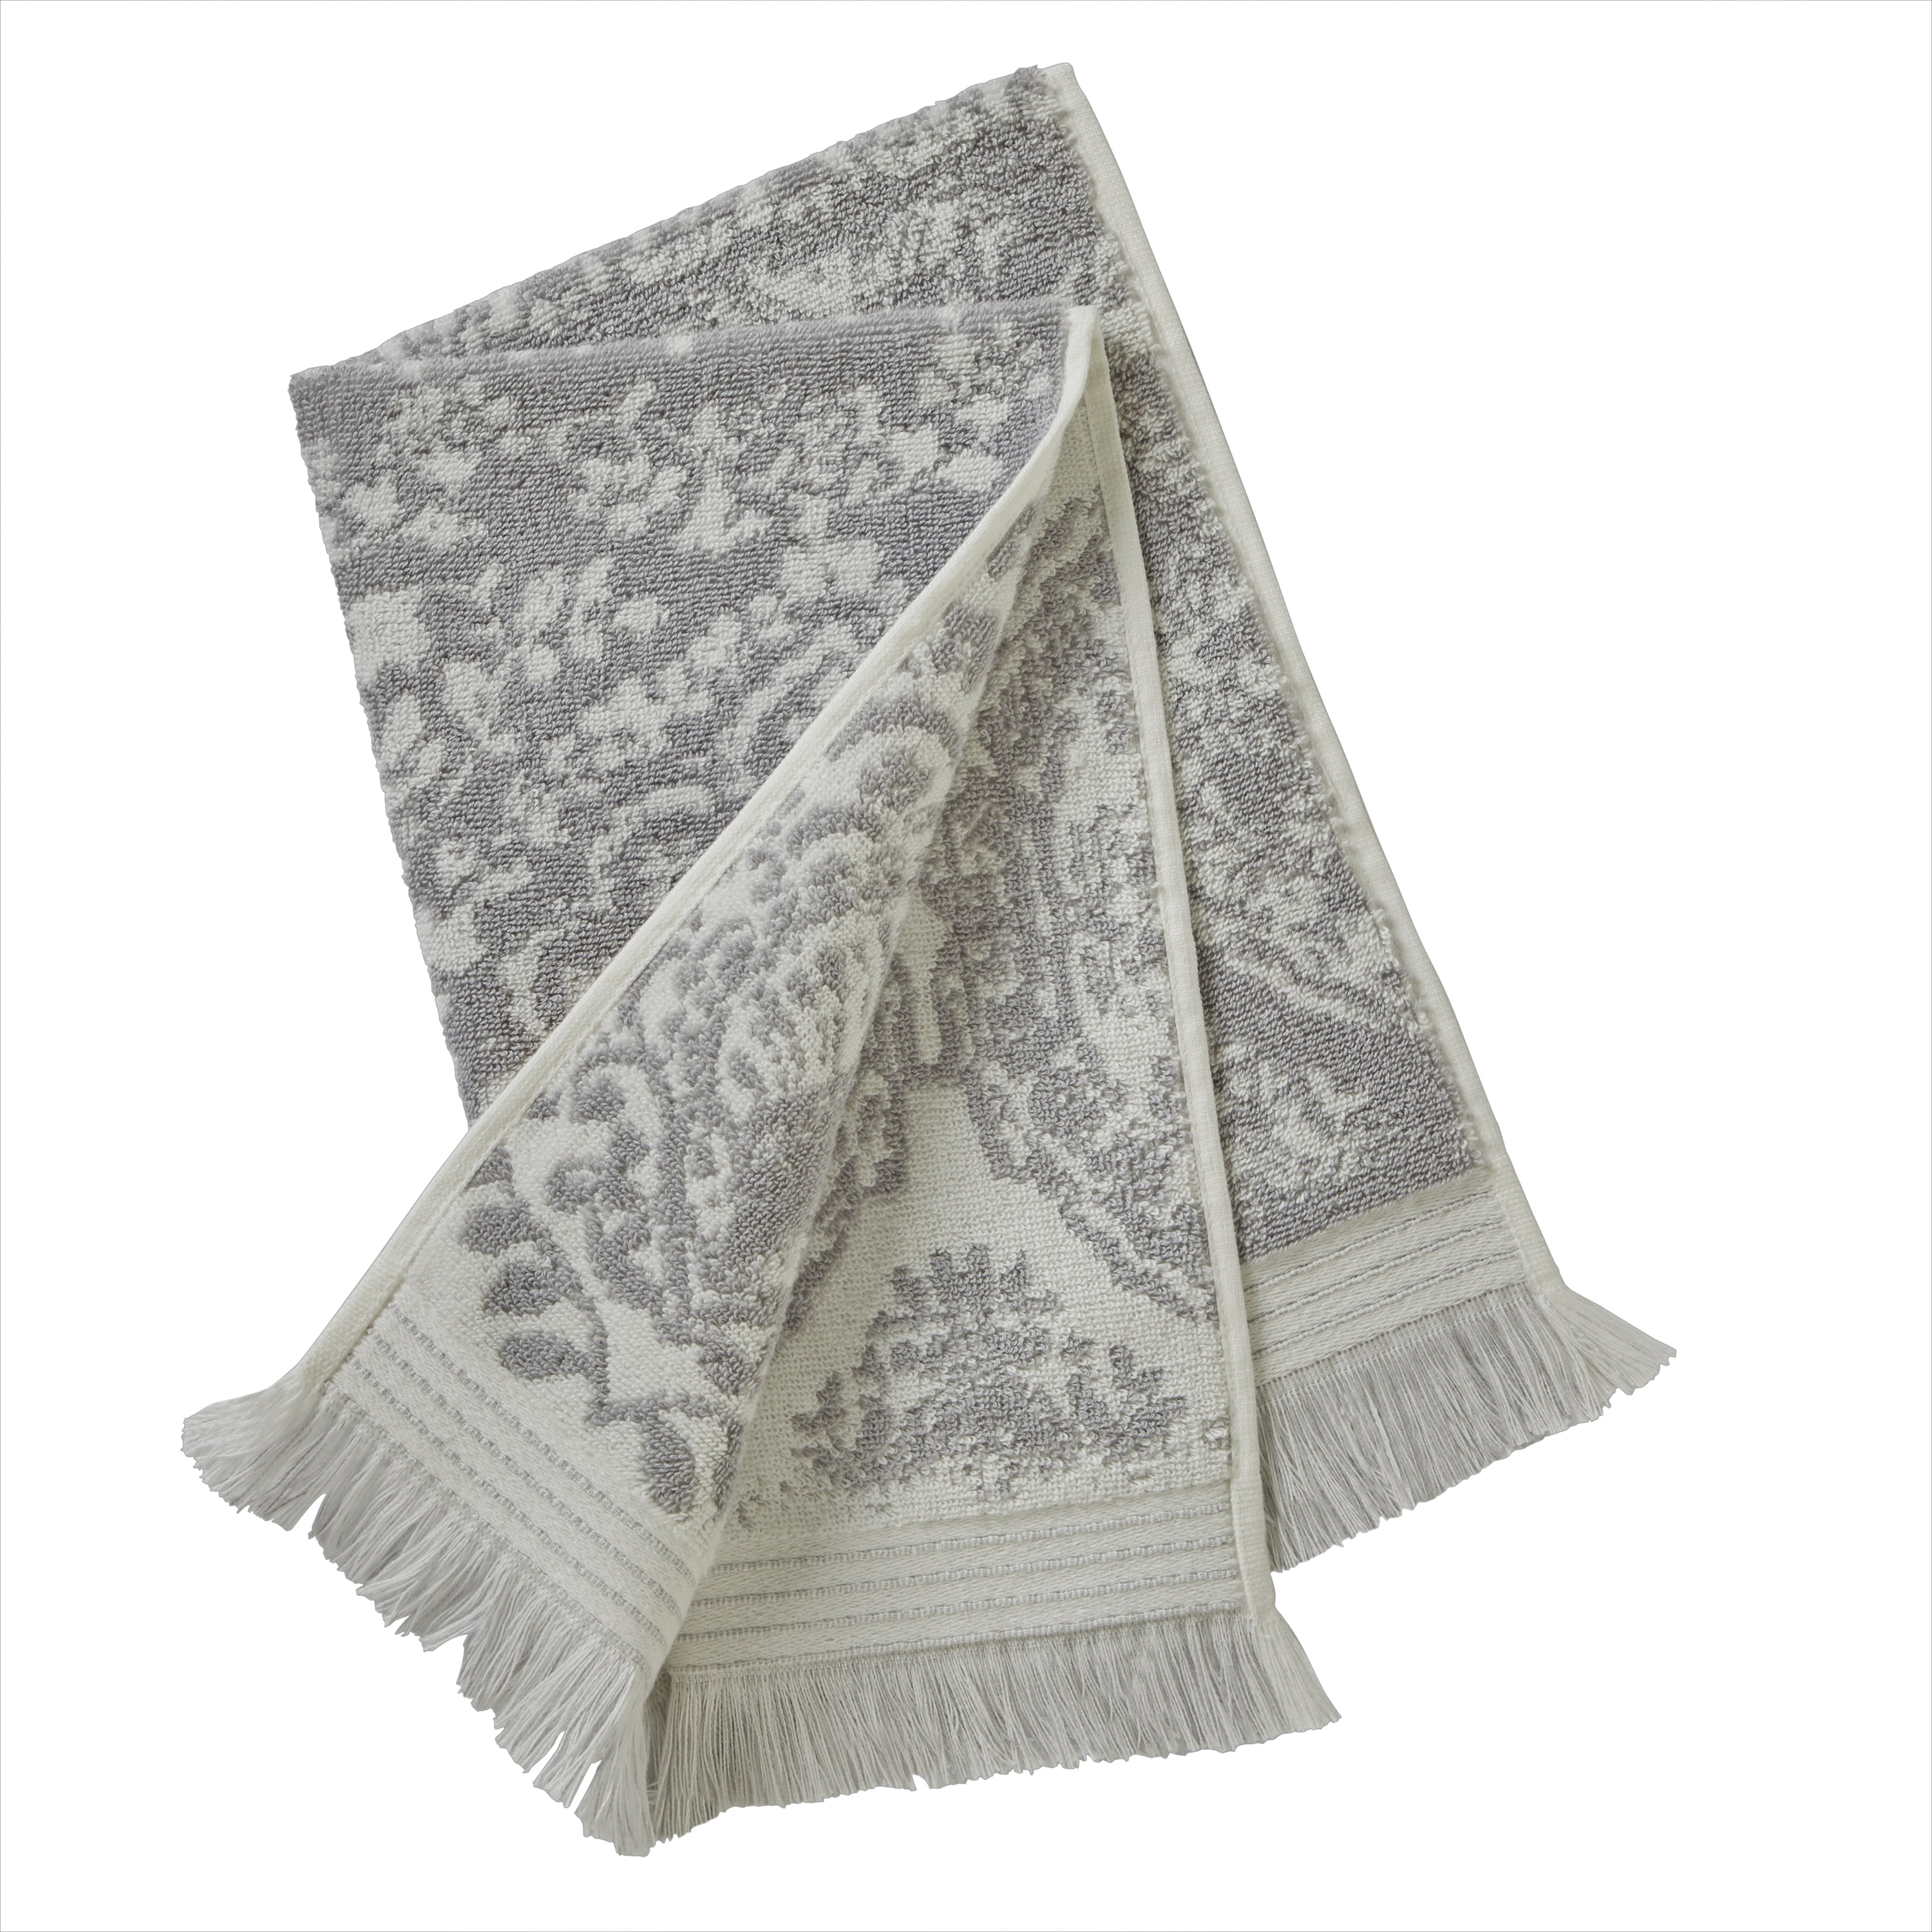 Millstrand Co. Lana Hand Towel Set in Slate Grey